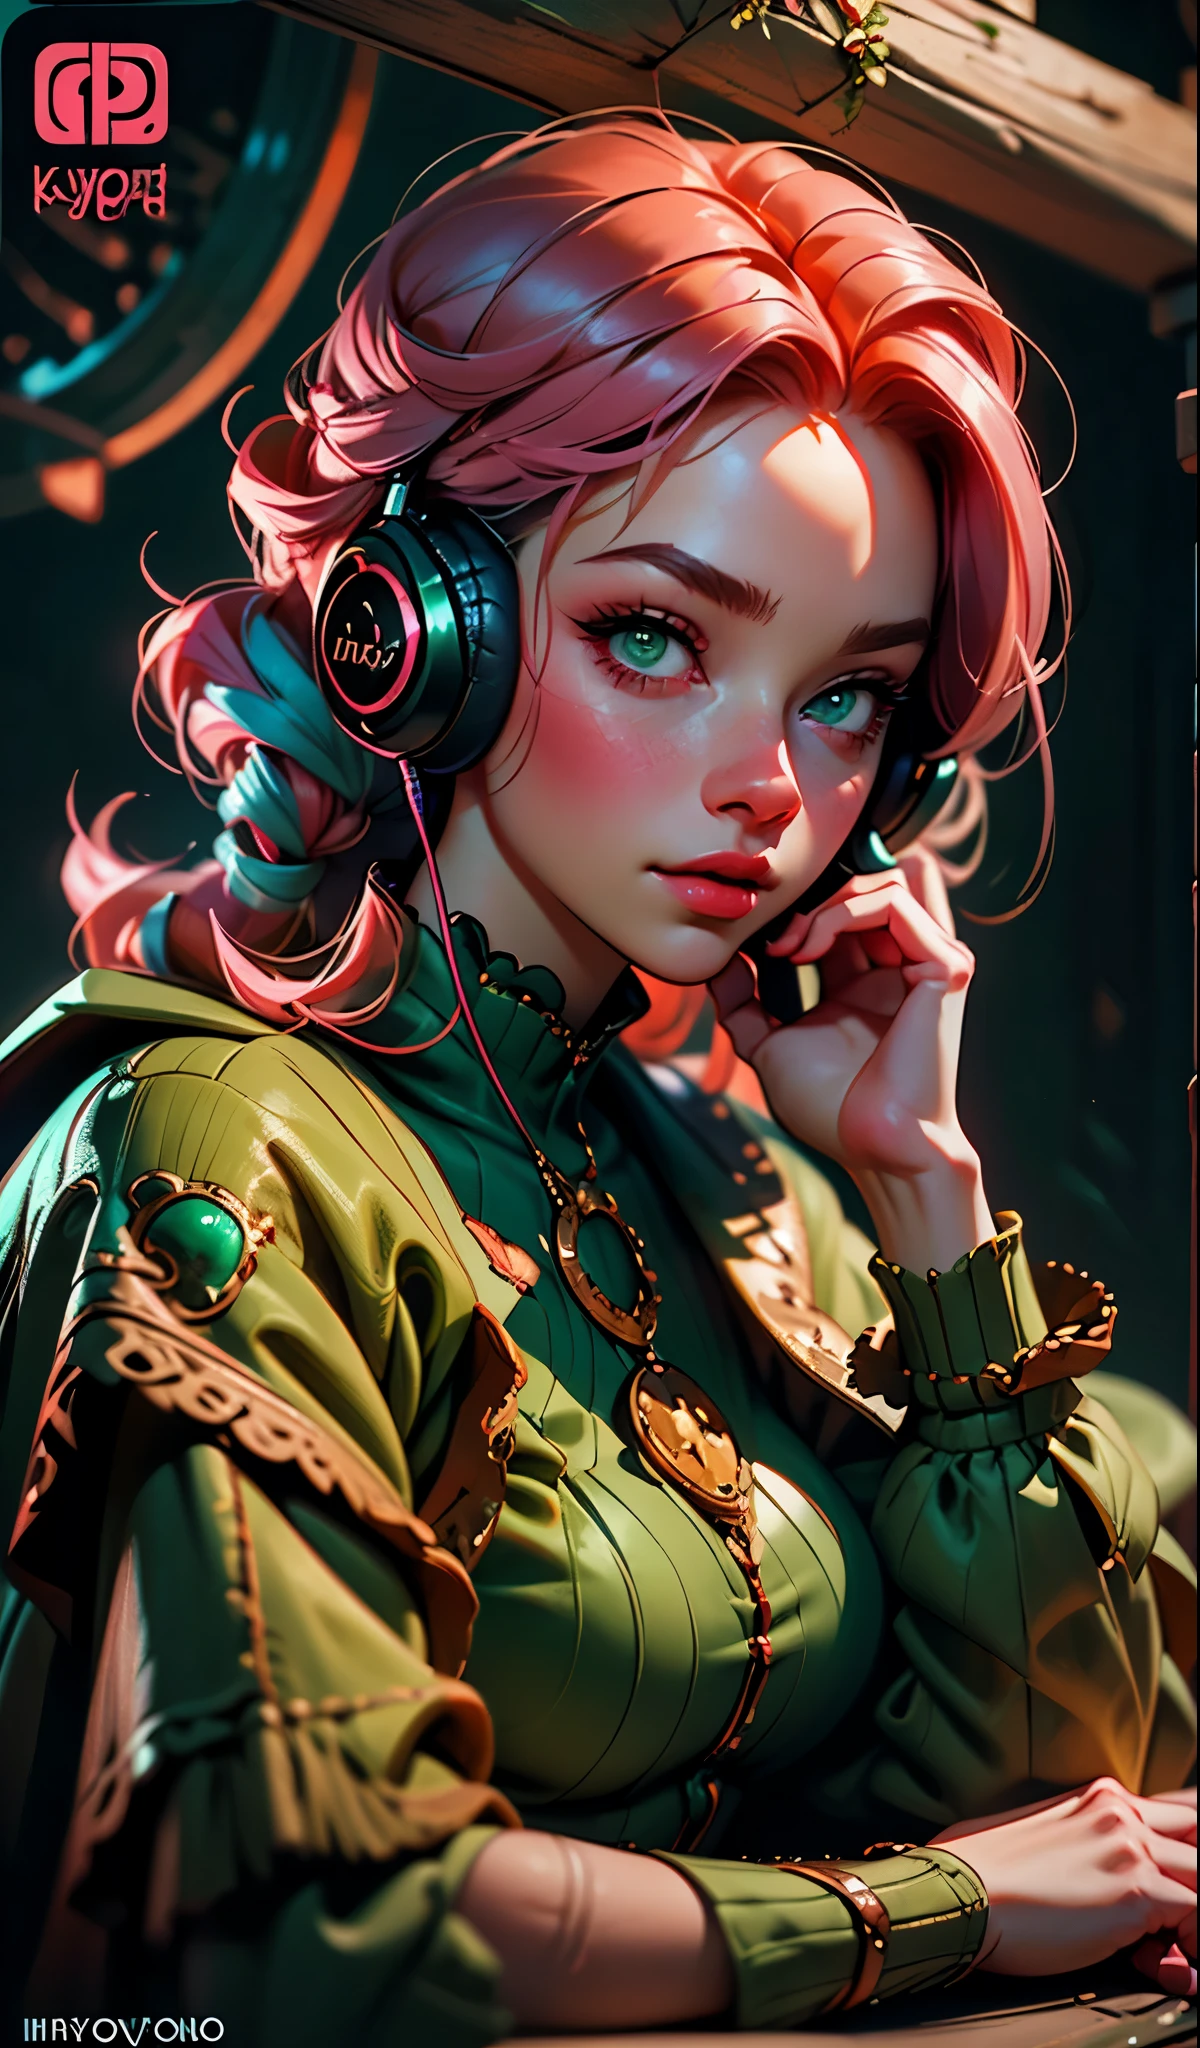 model girl wearing headphones, city background, emerald green eyes, pink hair, intricate details, aesthetically pleasing pastel colors, poster background, art by ilya kuvshinov